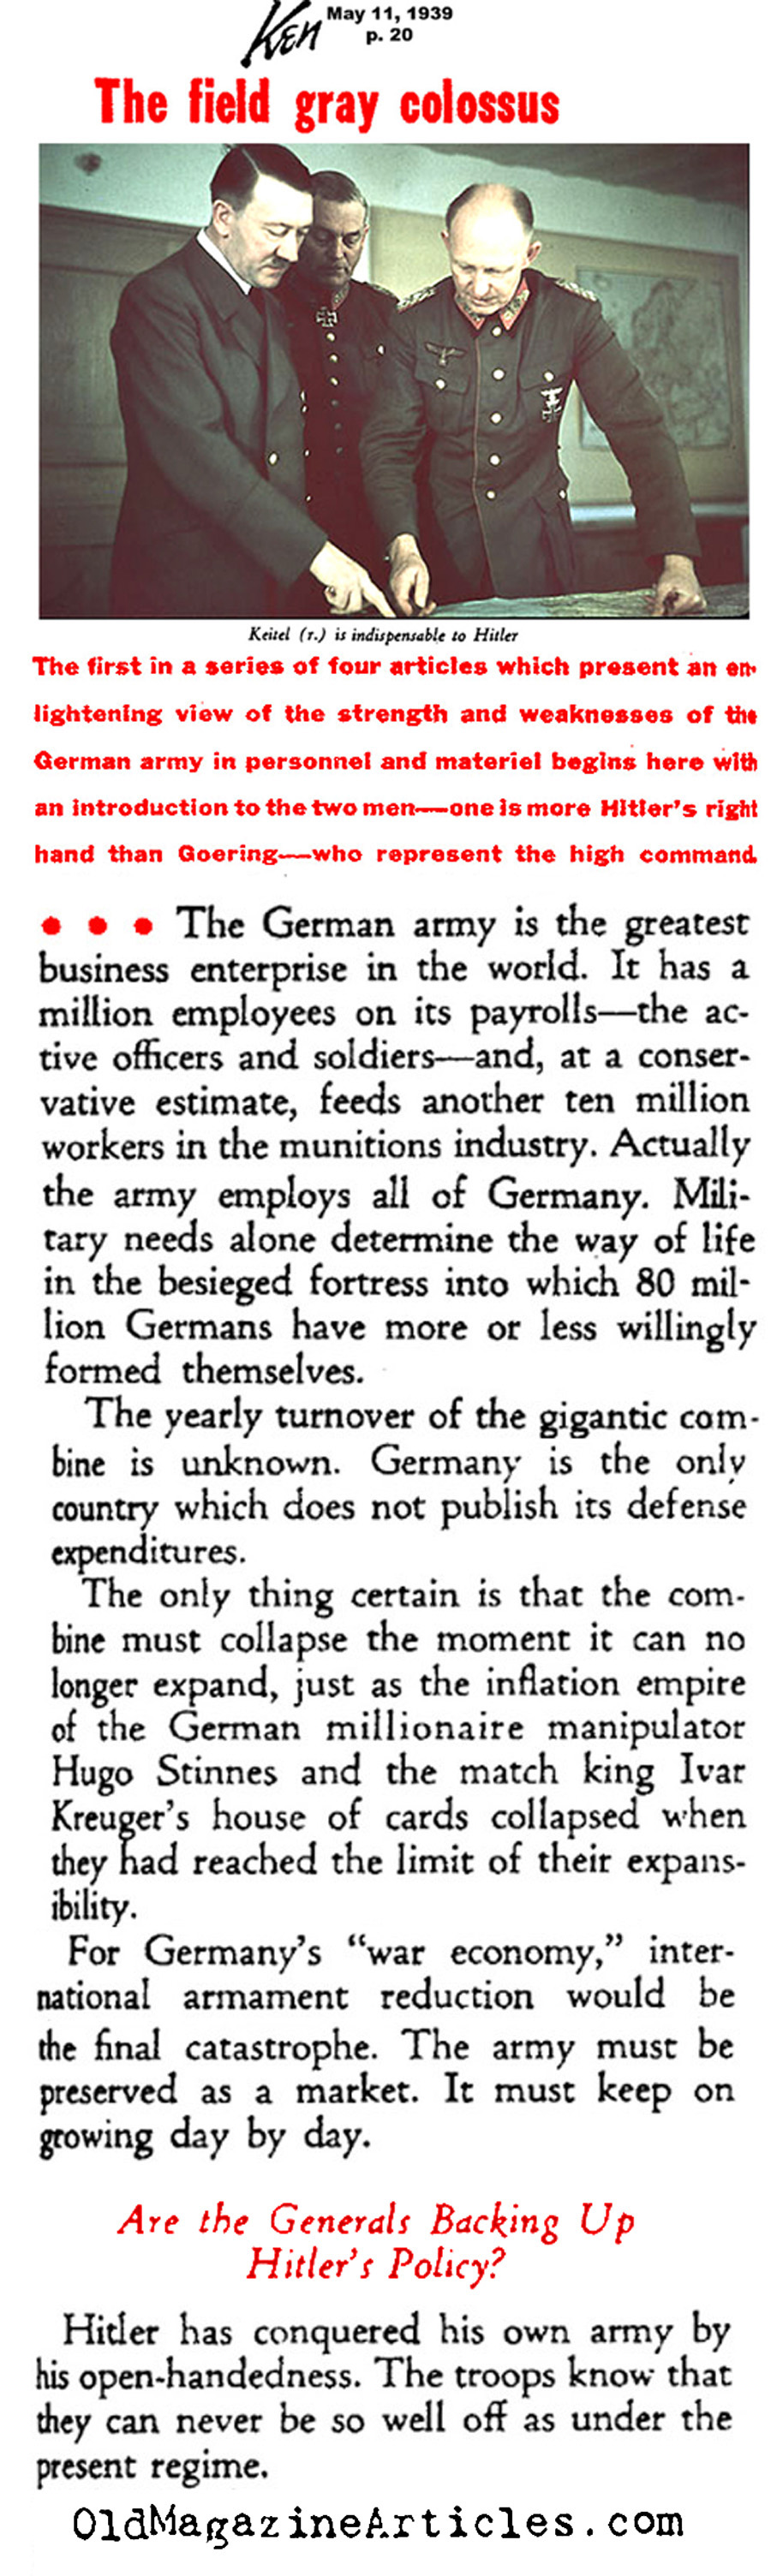 Military Buildup in Germany (Ken Magazine, 1939)